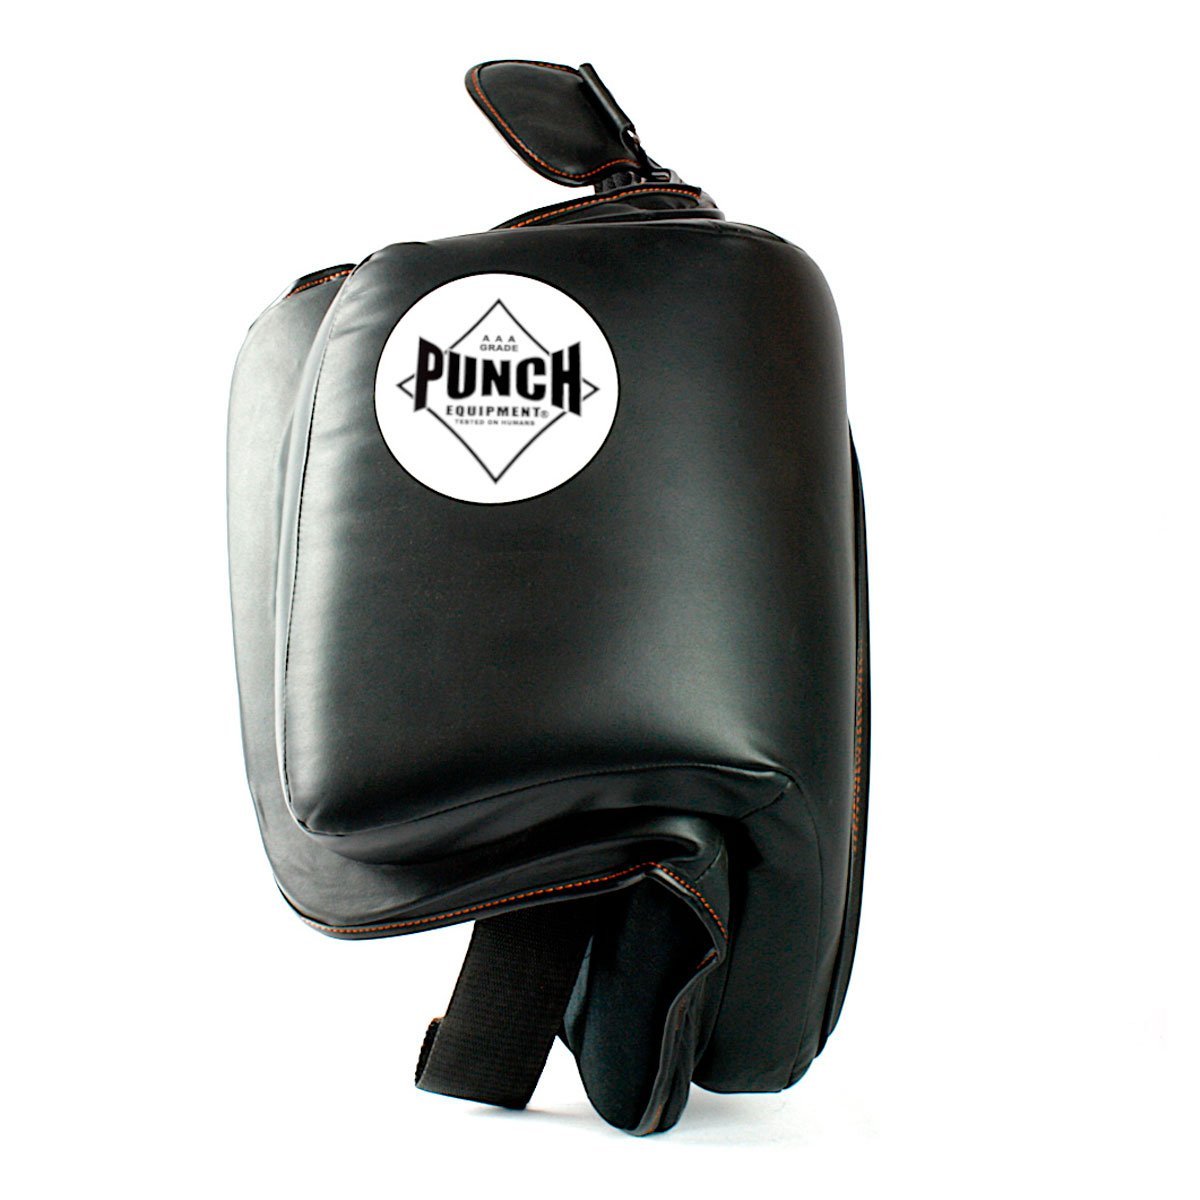 Punch Equipment Black Diamond Muay Thai Thigh Pads Equipment Punch Equipment Tactical Gear Supplier Tactical Distributors Australia